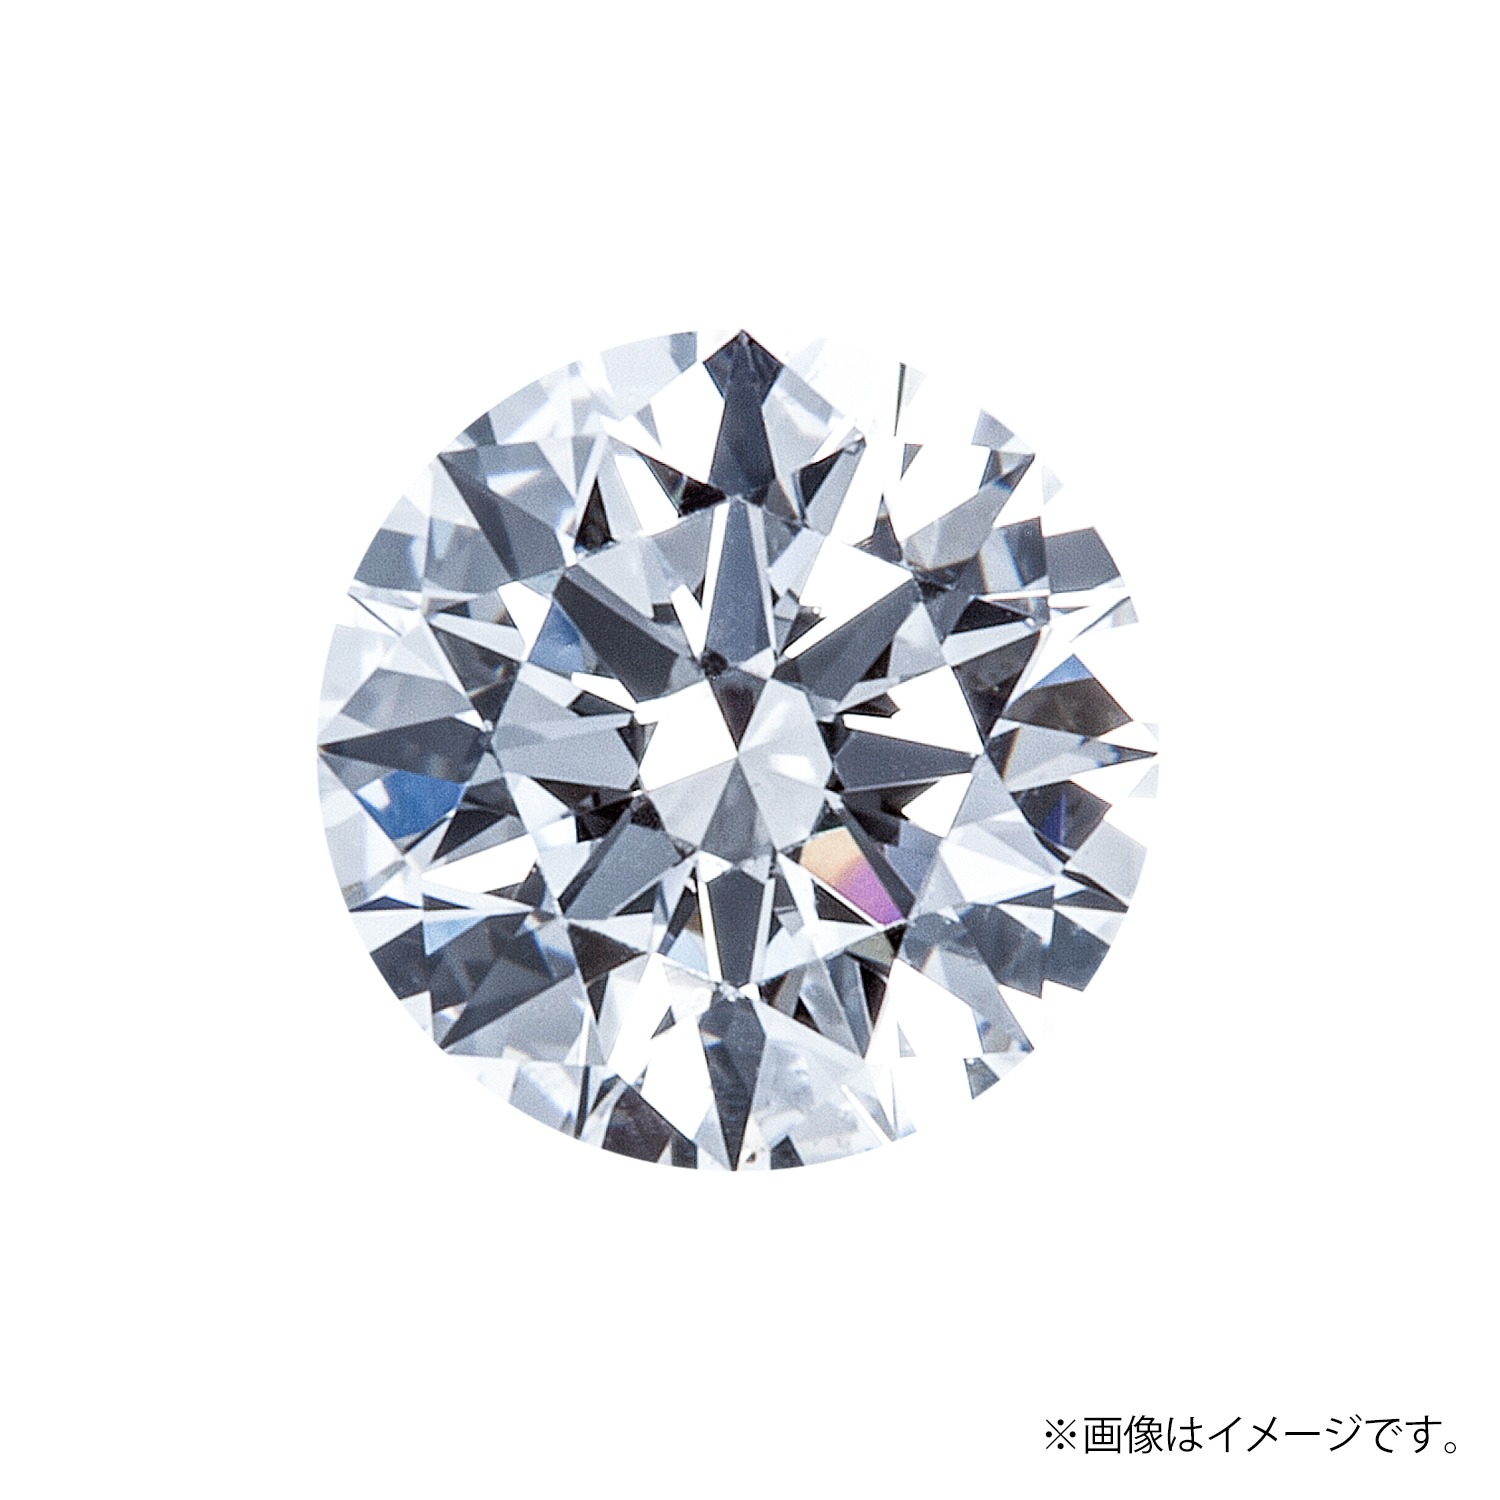 0.164ct Round ダイヤモンド / F / IF / 3EX H&C